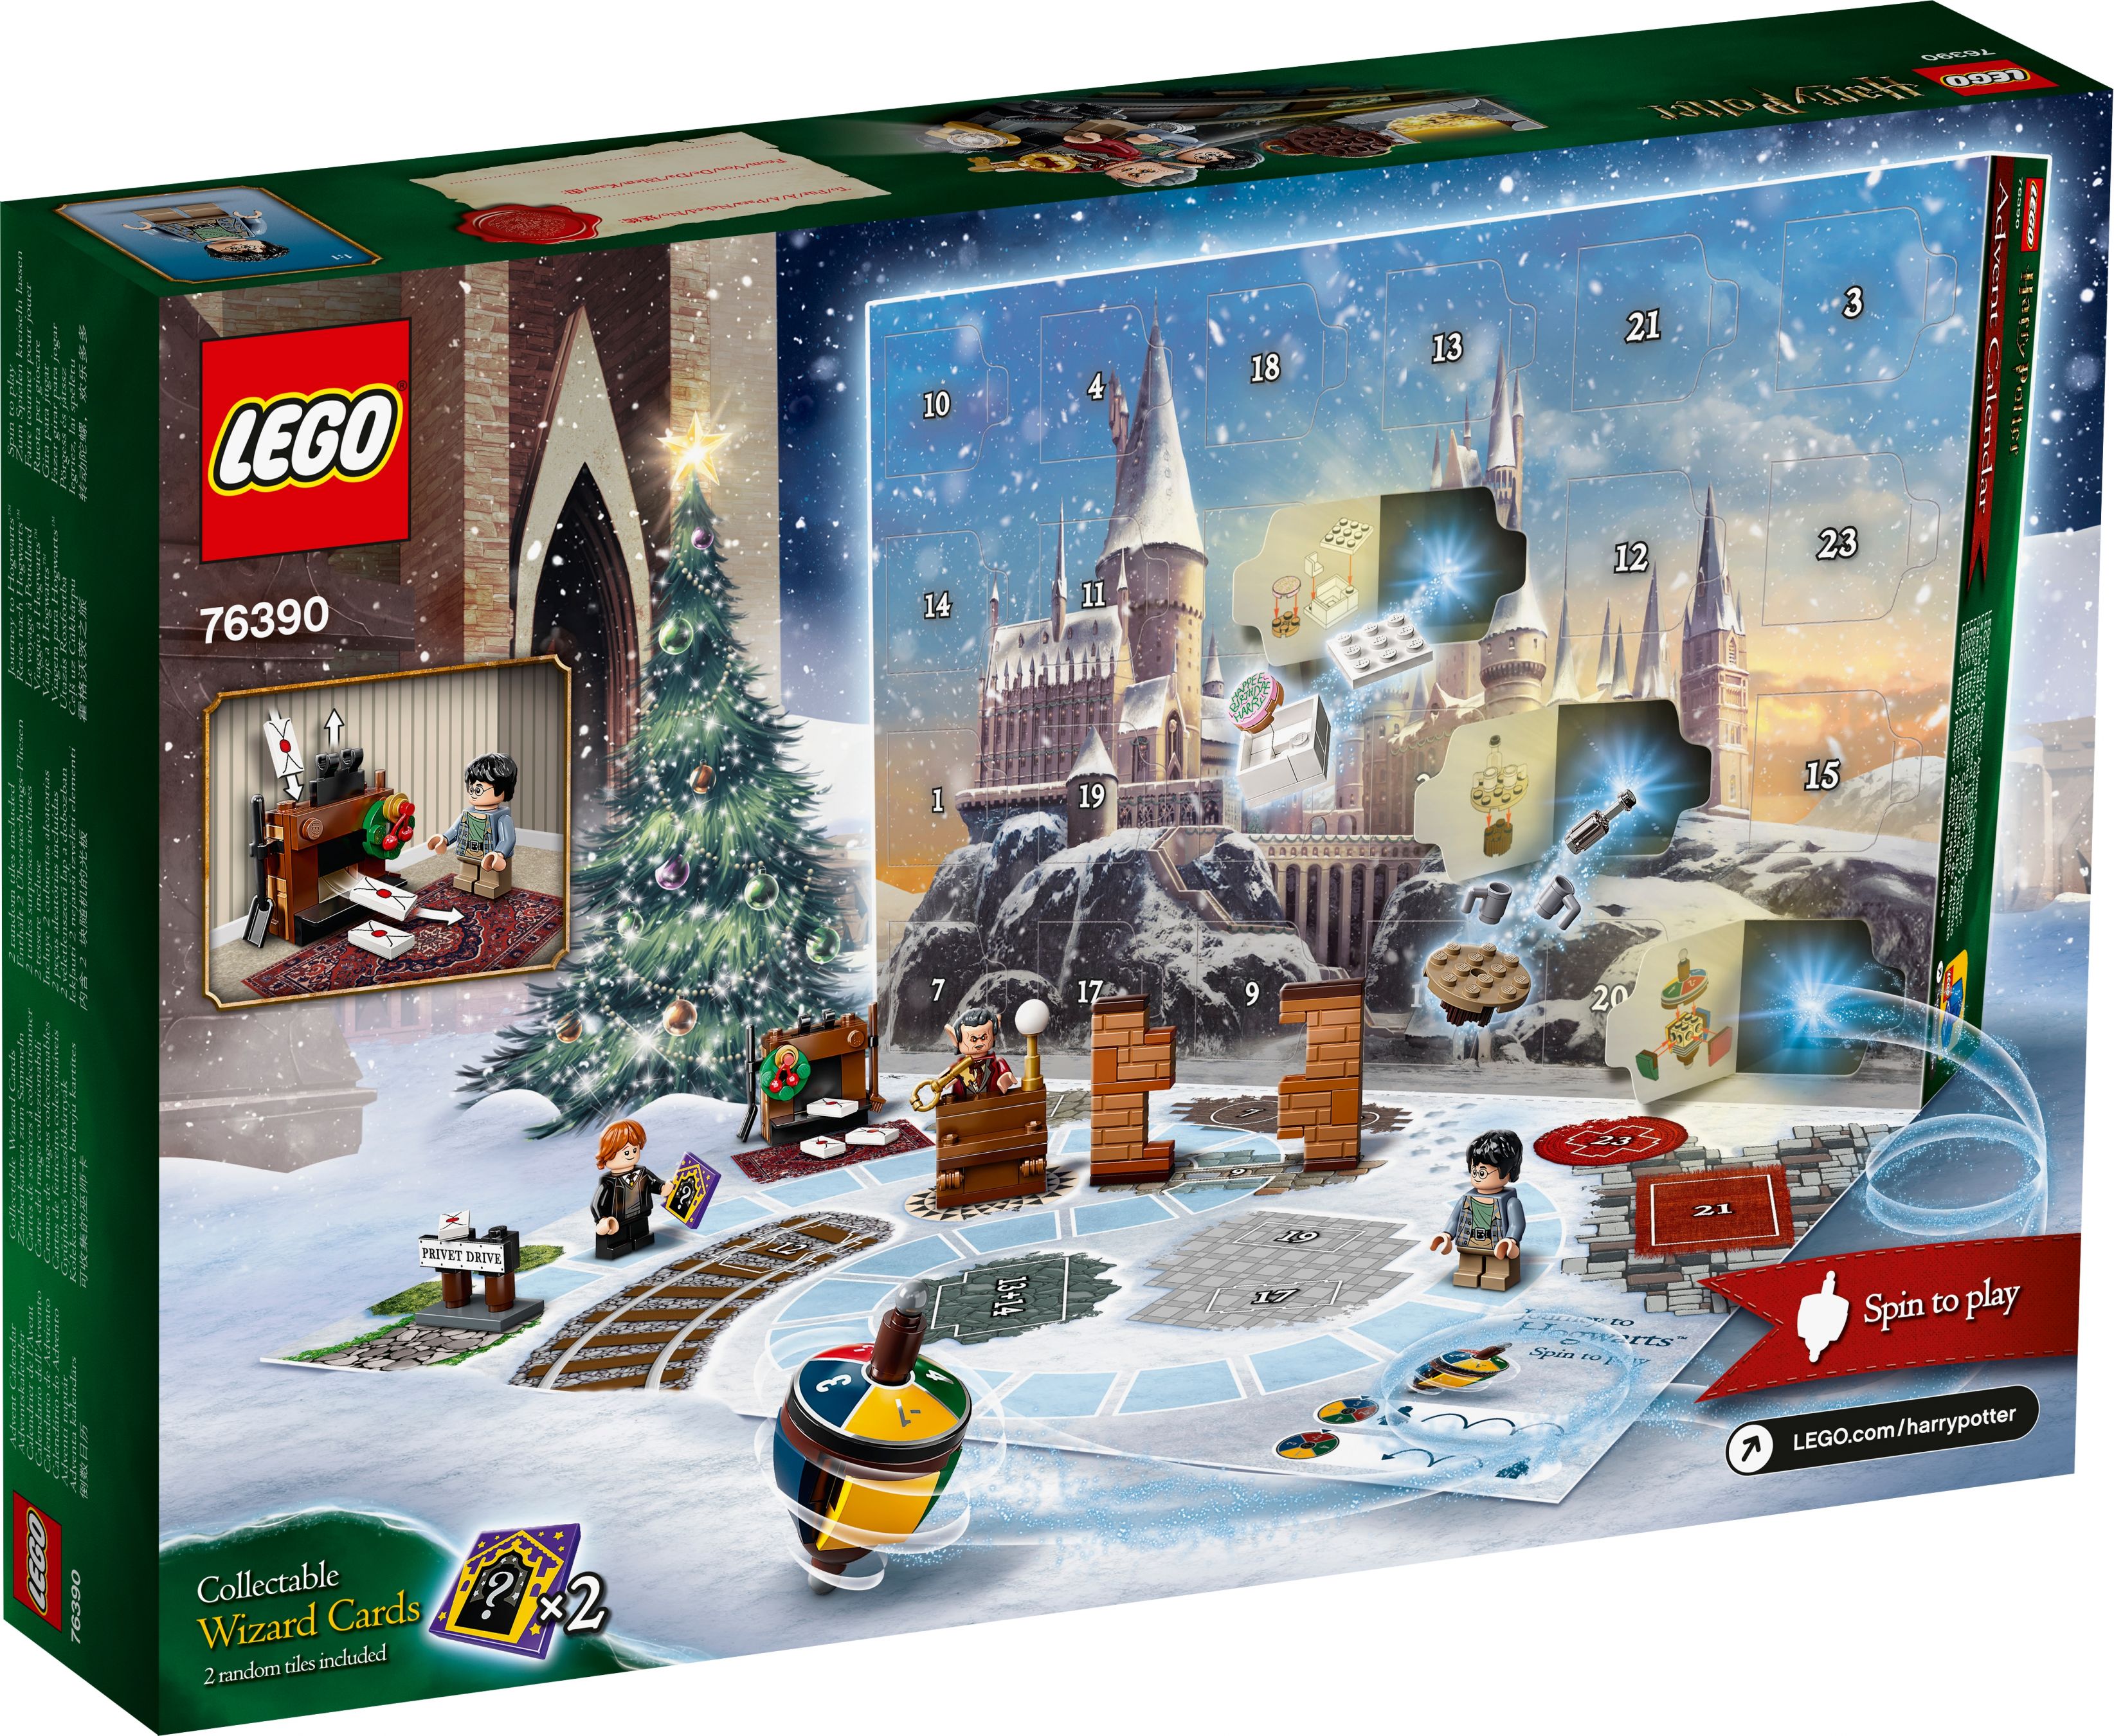 LEGO Harry Potter 76390 LEGO® Harry Potter™ Adventskalender LEGO_76390_alt2.jpg